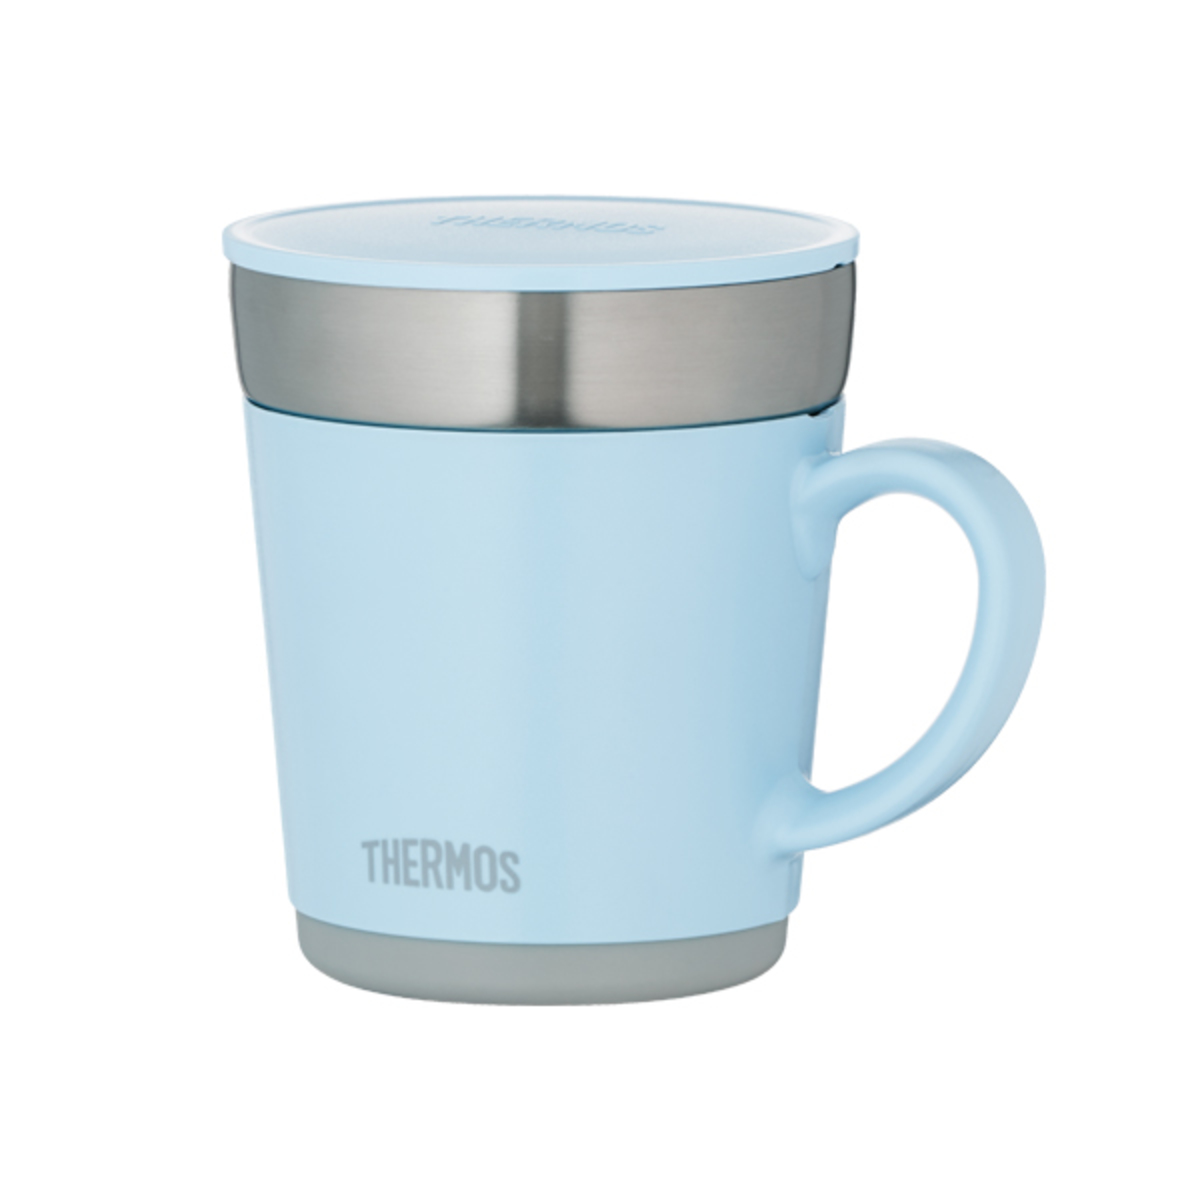 Thermal Insulated Mug 350ml - Light Blue